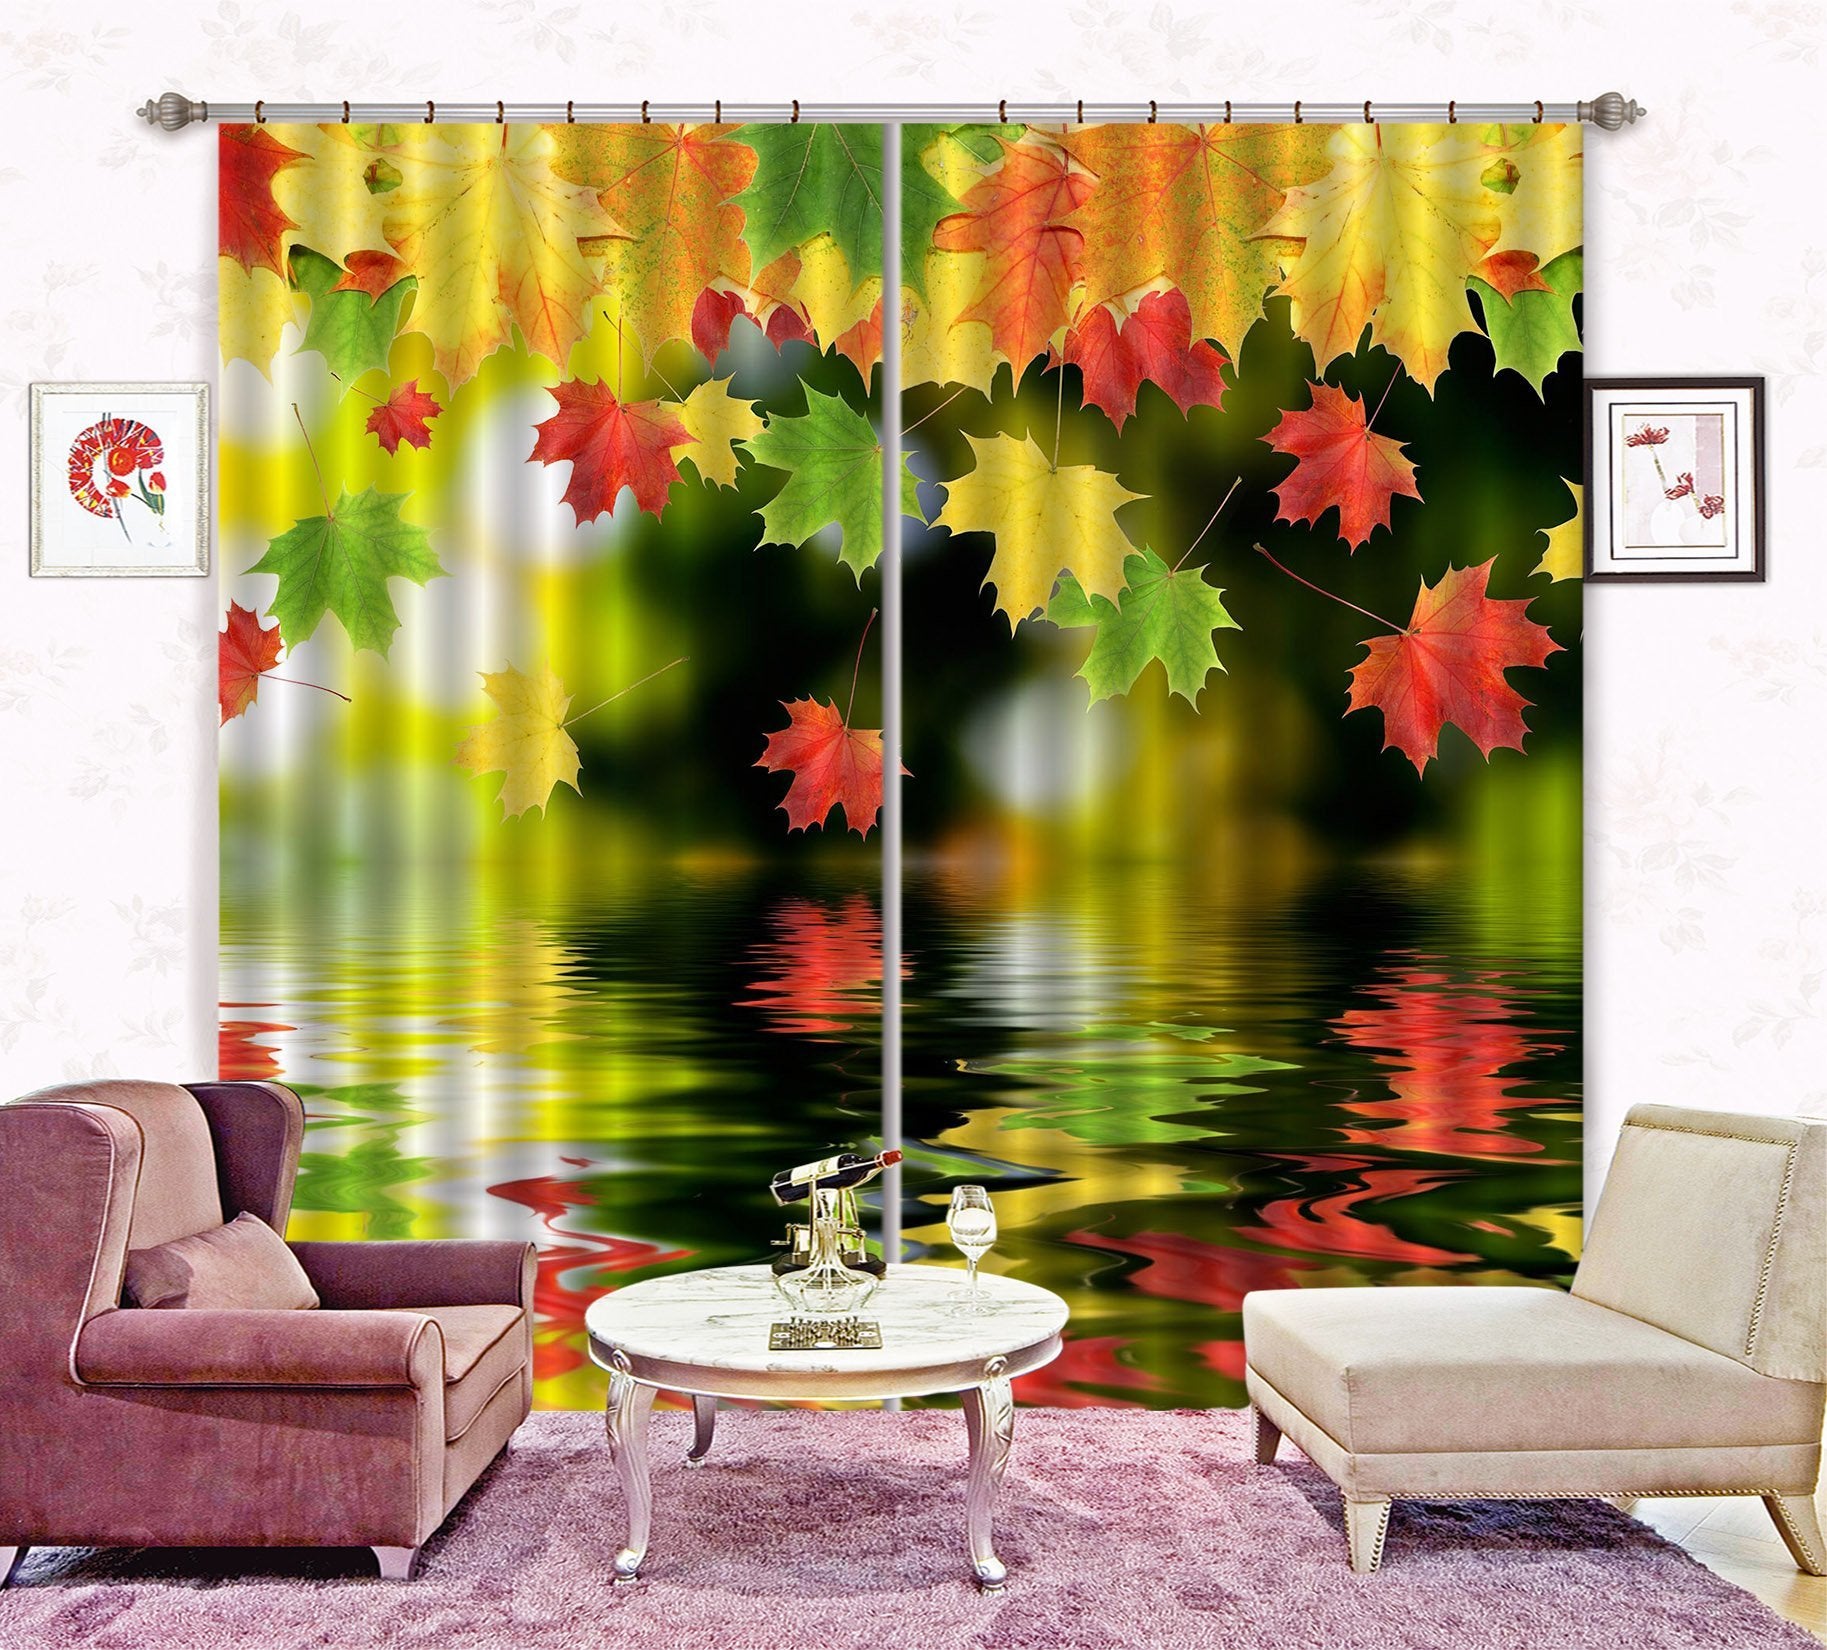 3D Colorful Leaves 2269 Curtains Drapes Wallpaper AJ Wallpaper 